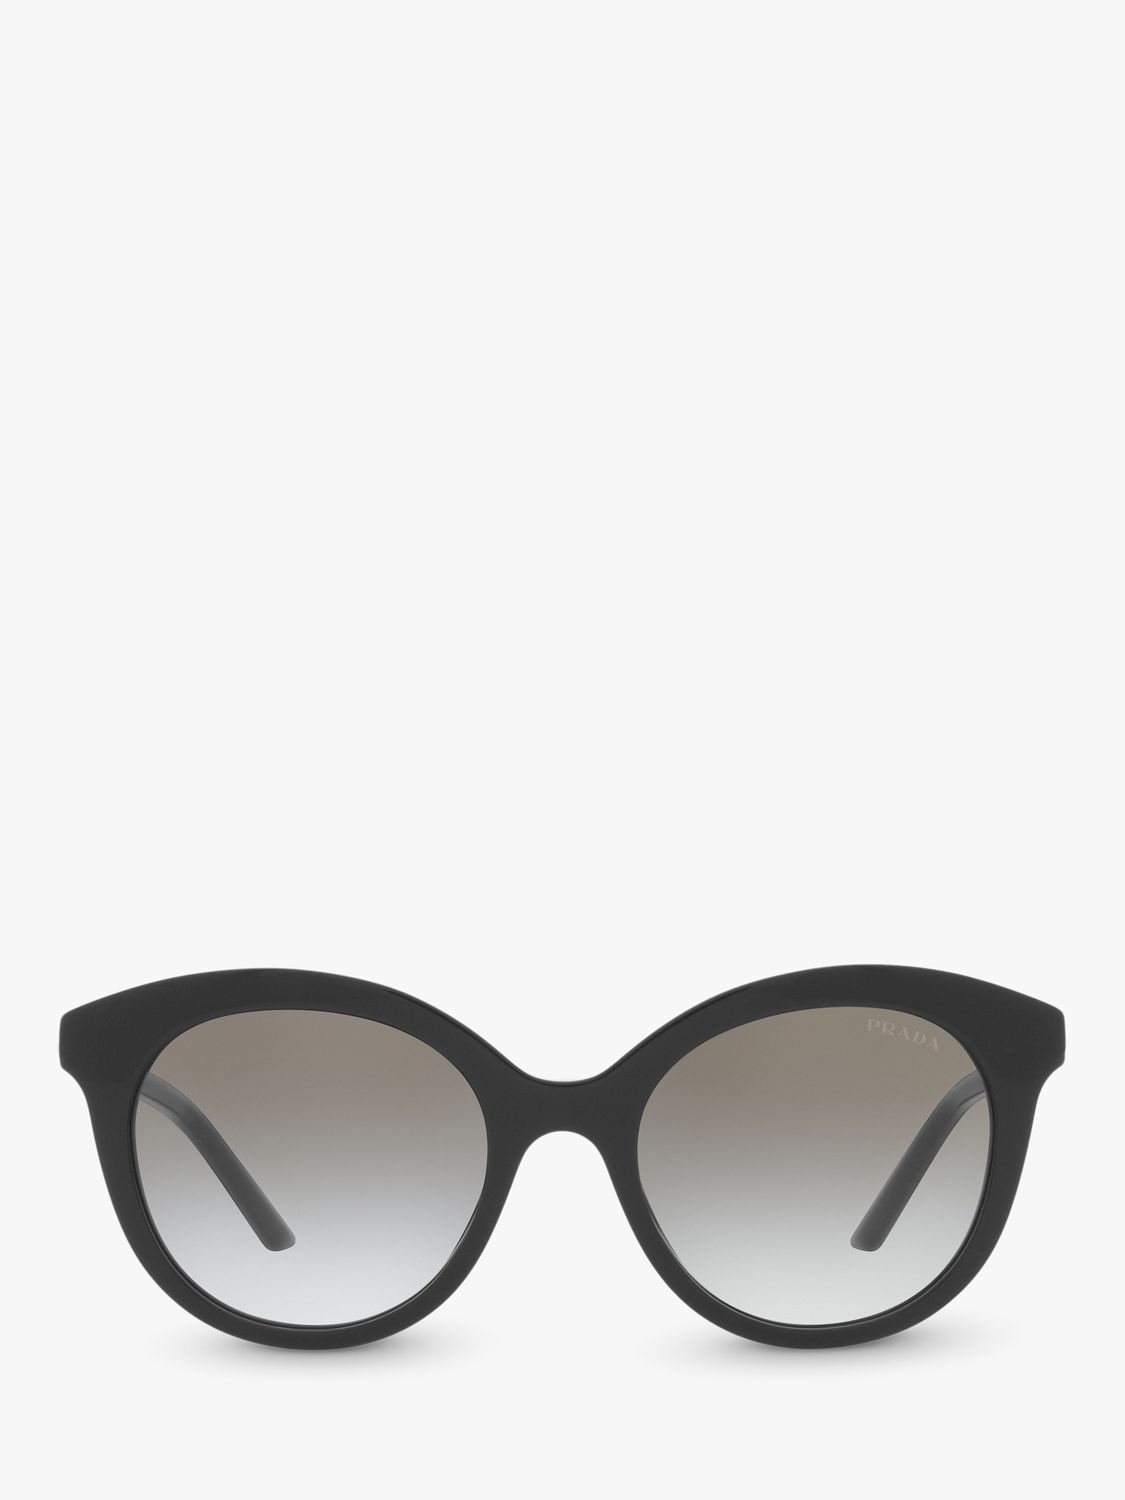 Prada PR 02YS Women's Round Sunglasses, Black/Grey at John Lewis & Partners